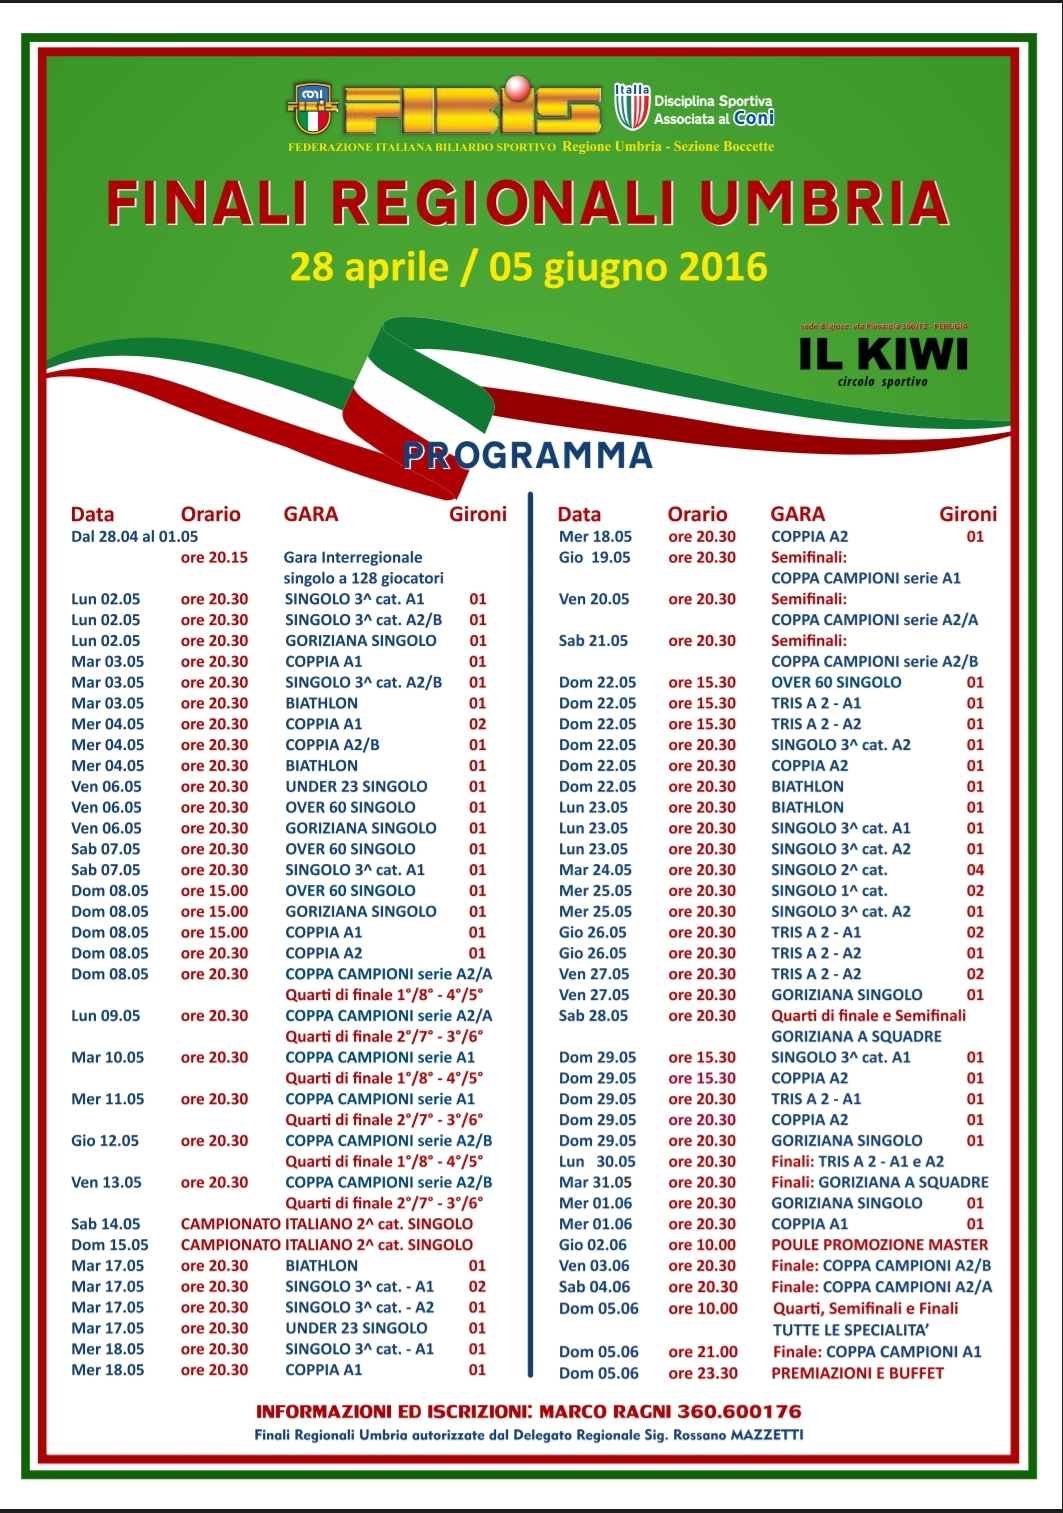 FINALI CAMPIONATI REGIONALI UMBRIA 2015-2016